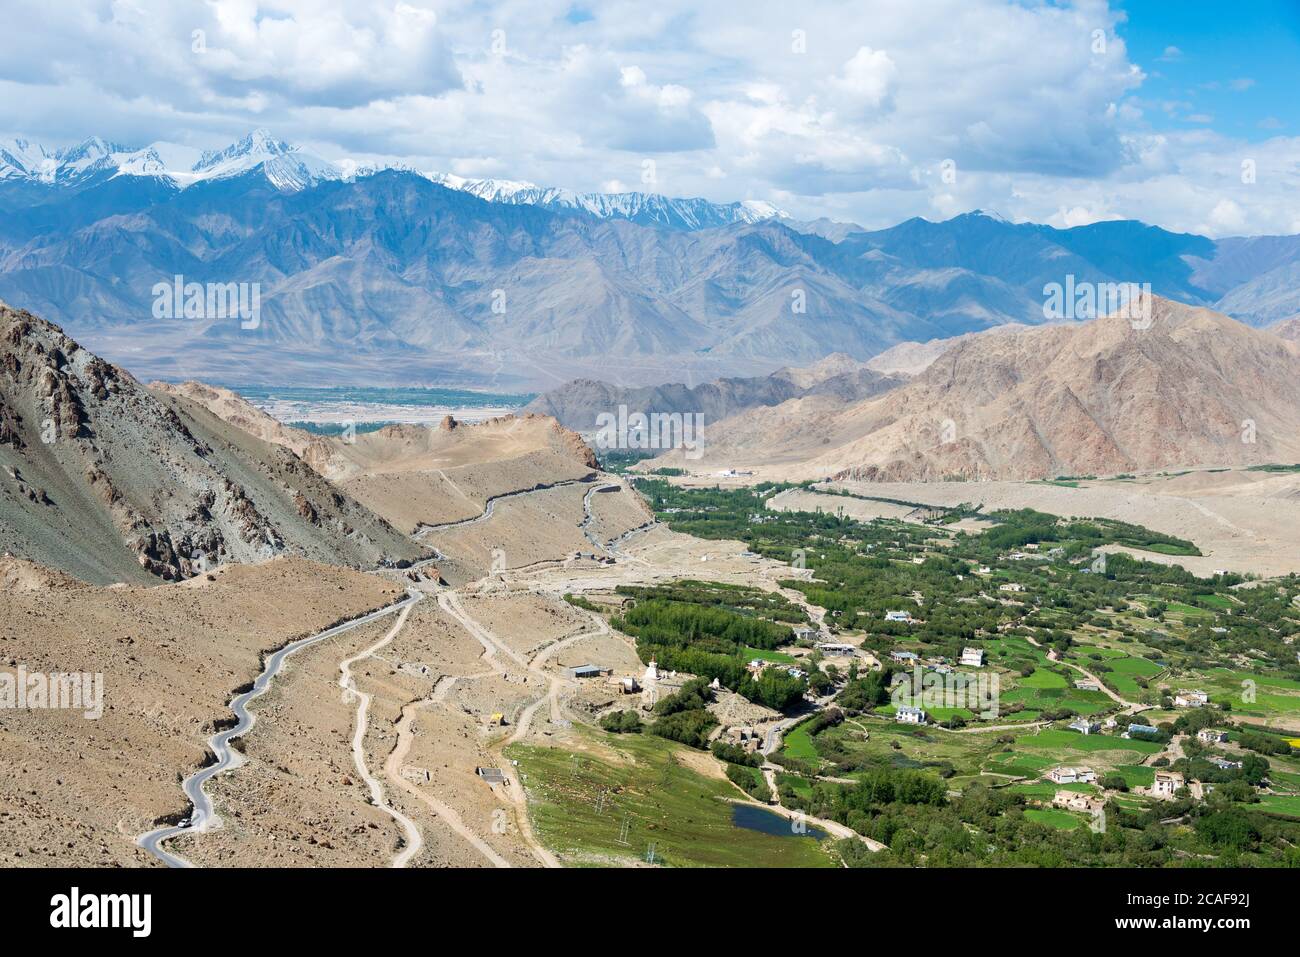 View of Nubra Valley - Ladakh (India)